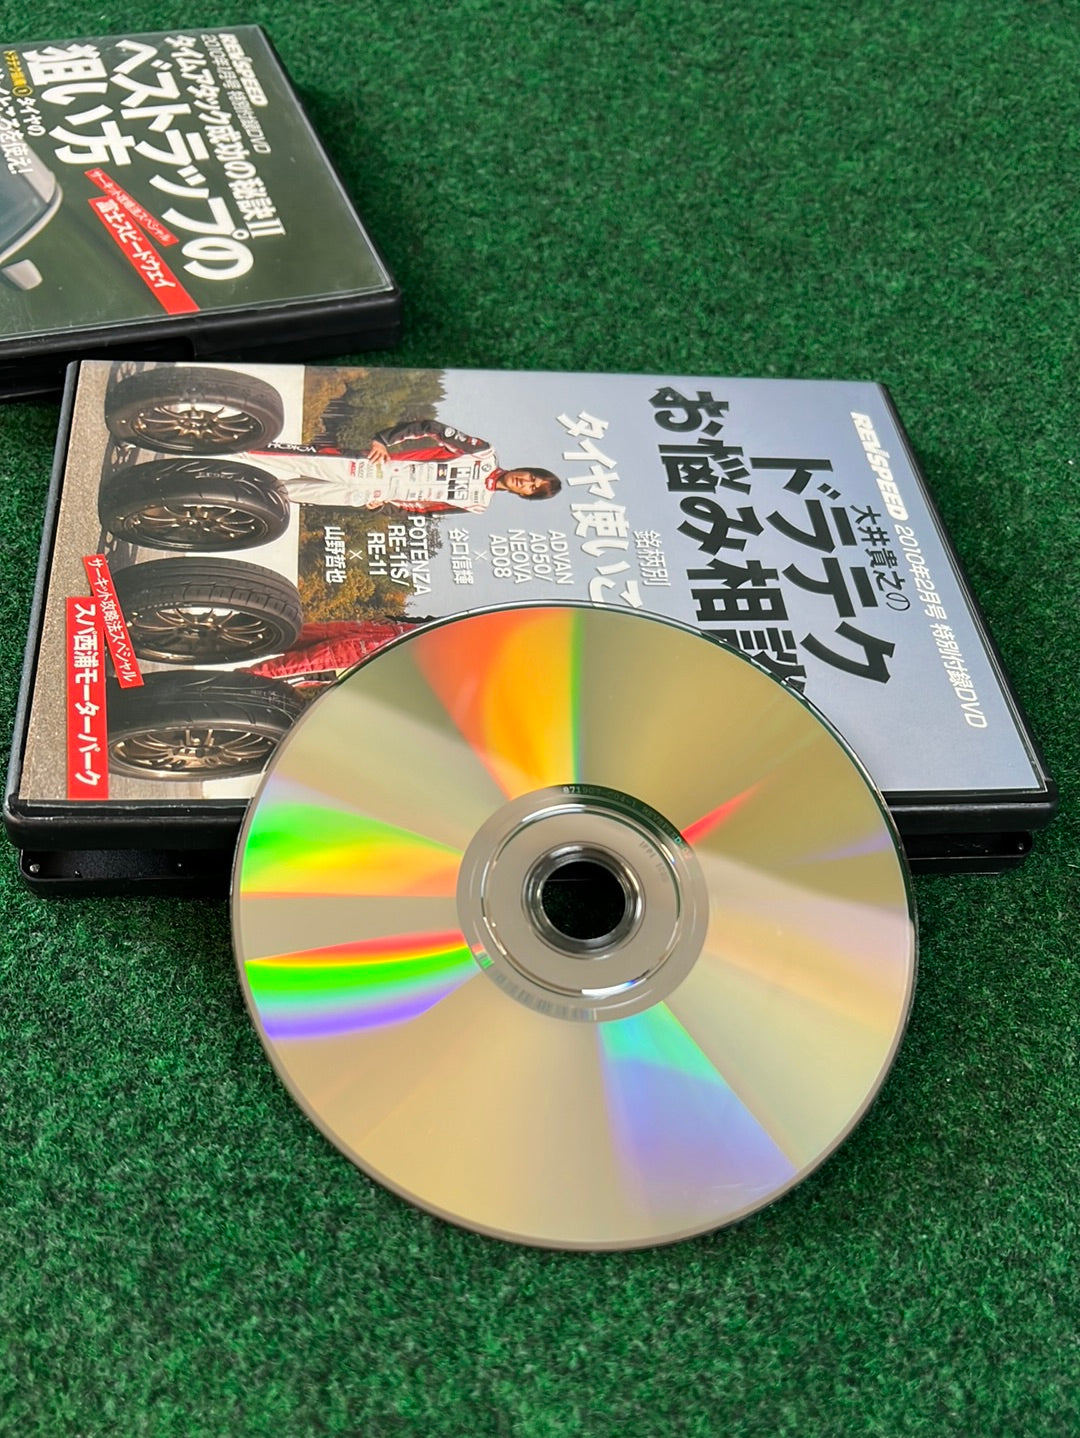 REVSPEED DVD - Vol. 9 & 10 Set of 2